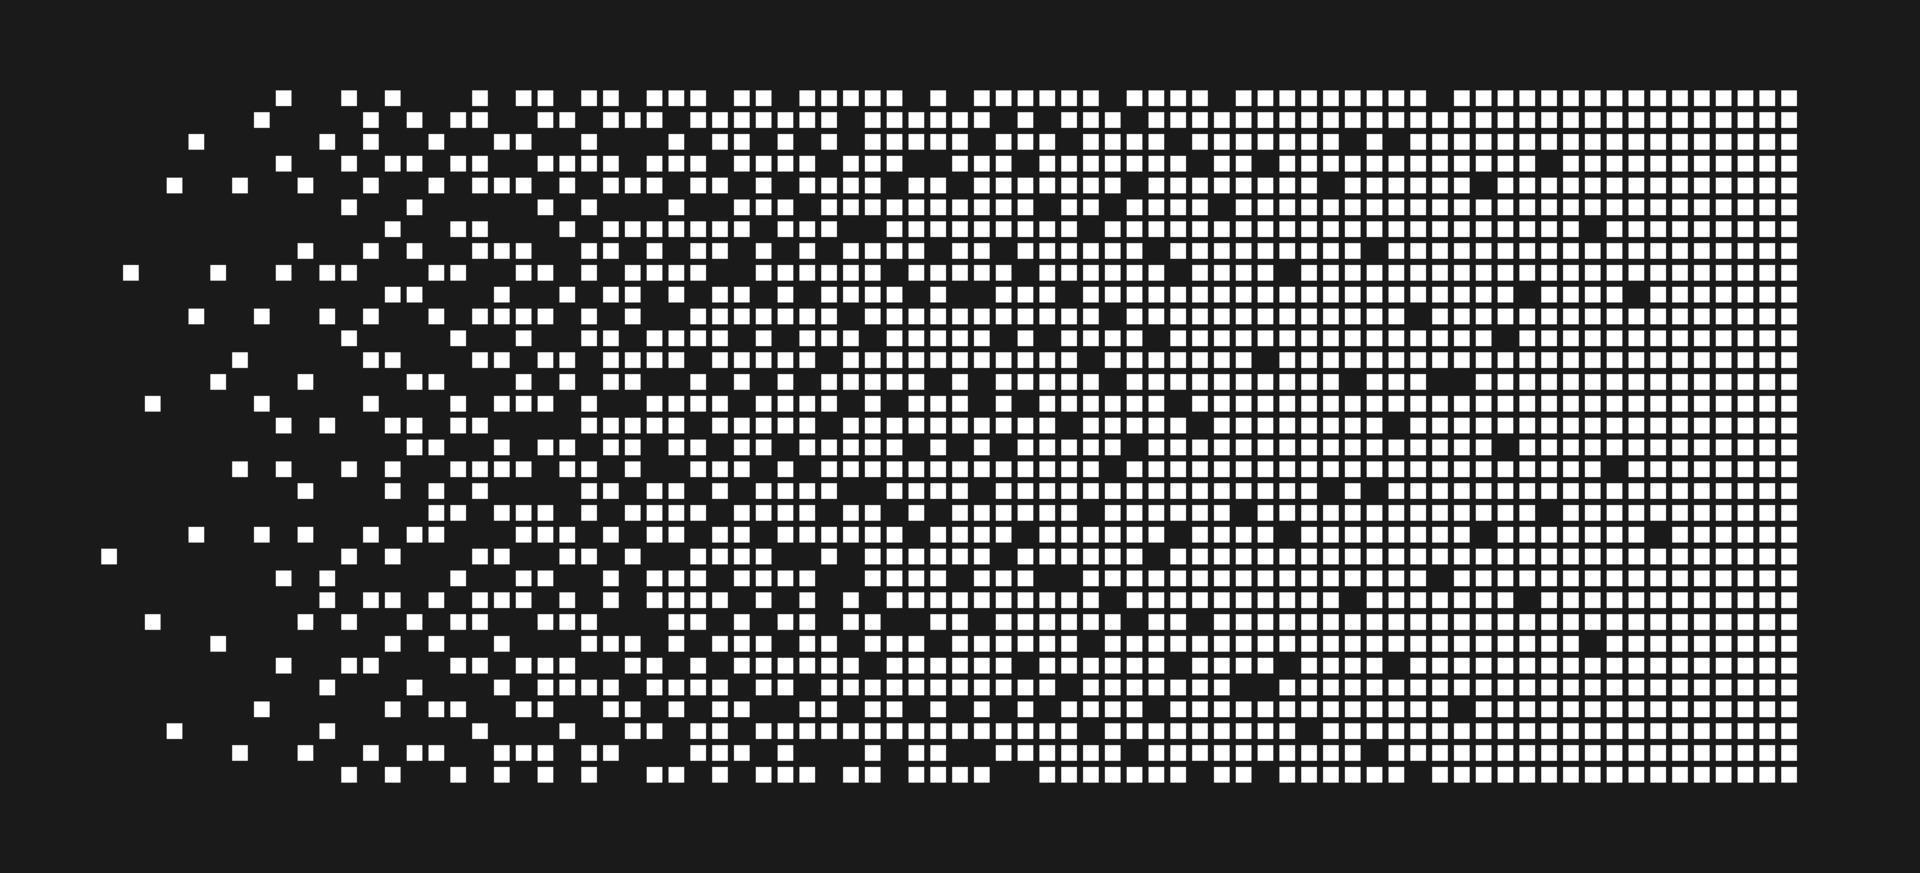 fondo de desintegración de píxeles. efecto de descomposición. patrón de puntos dispersos. concepto de desintegración. textura de mosaico de píxeles abstractos con partículas cuadradas simples. ilustración vectorial sobre fondo negro vector